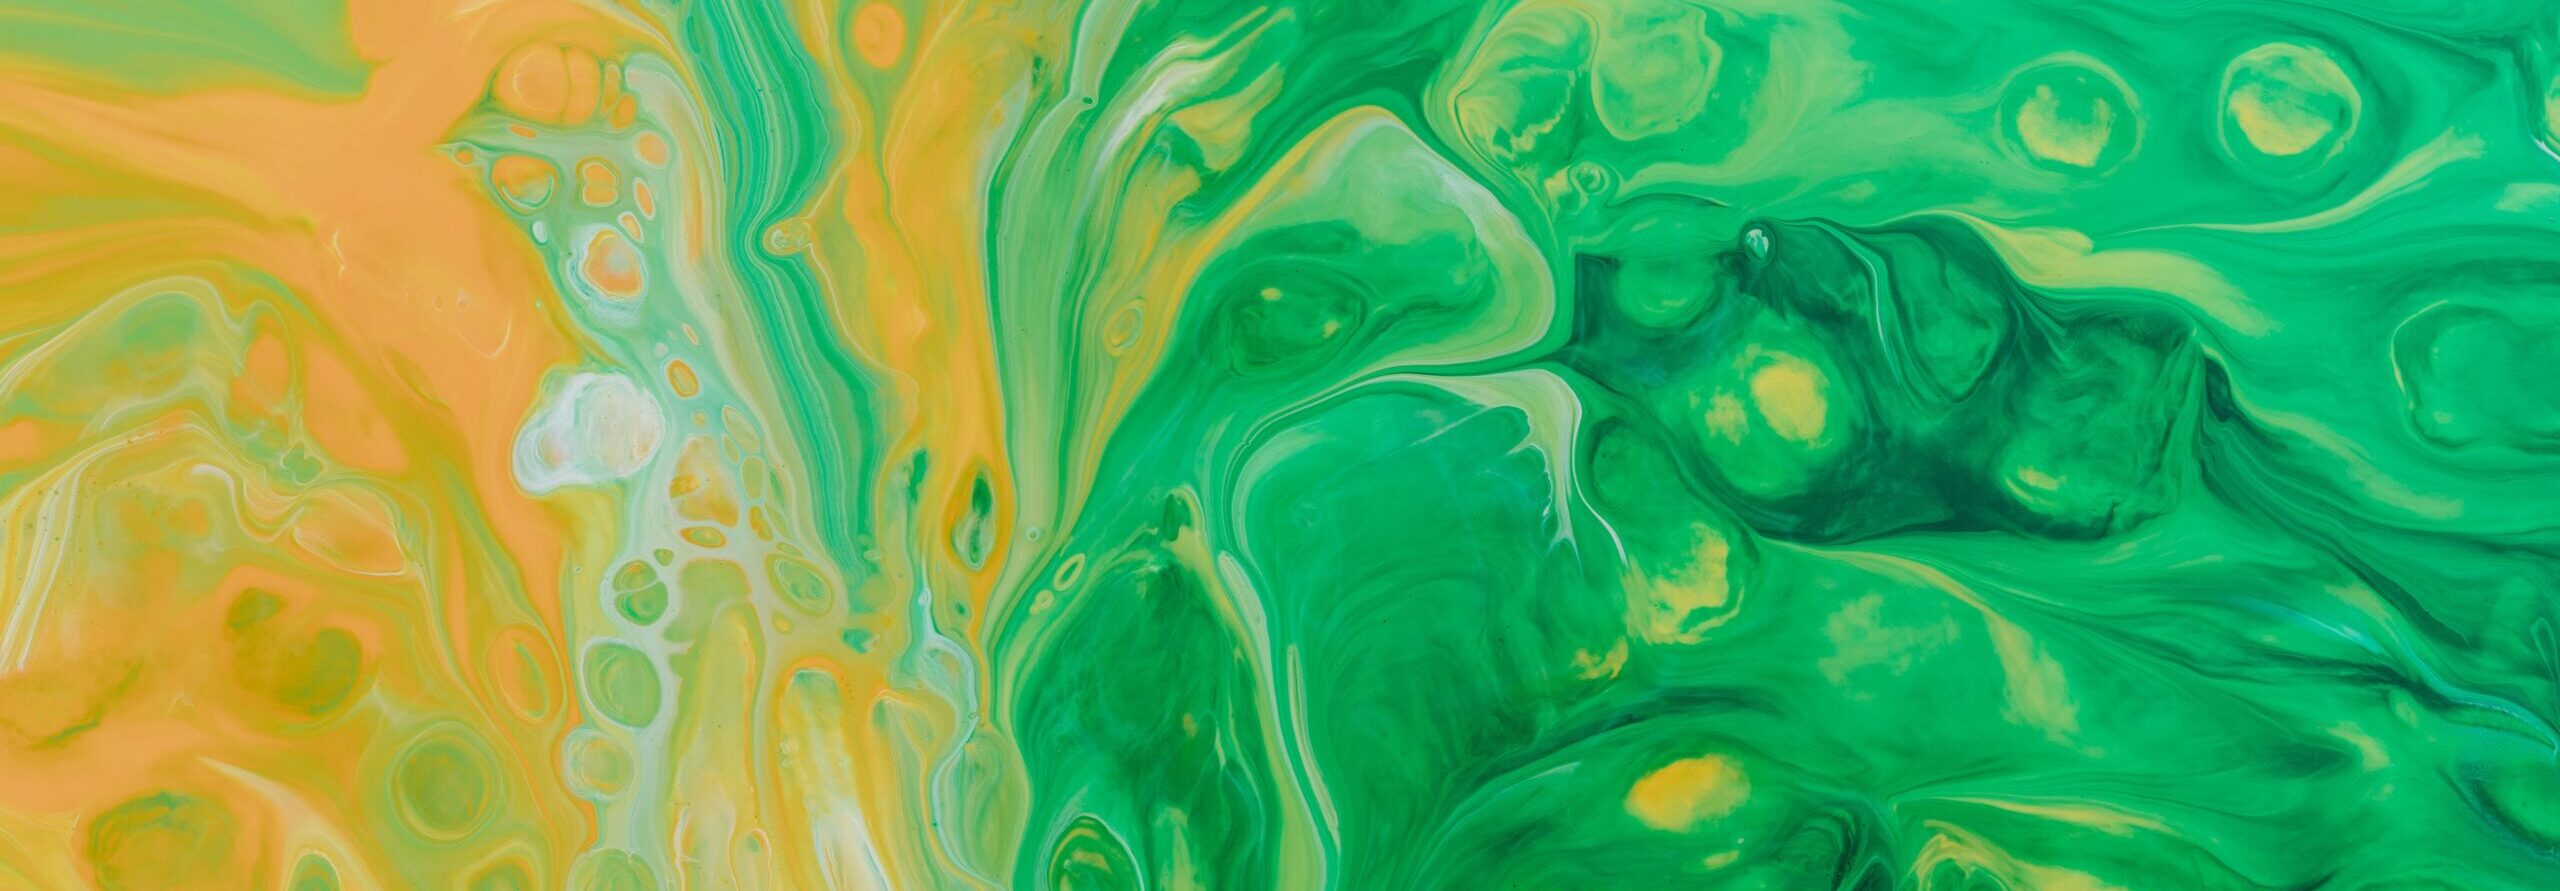 Abstract green swirls